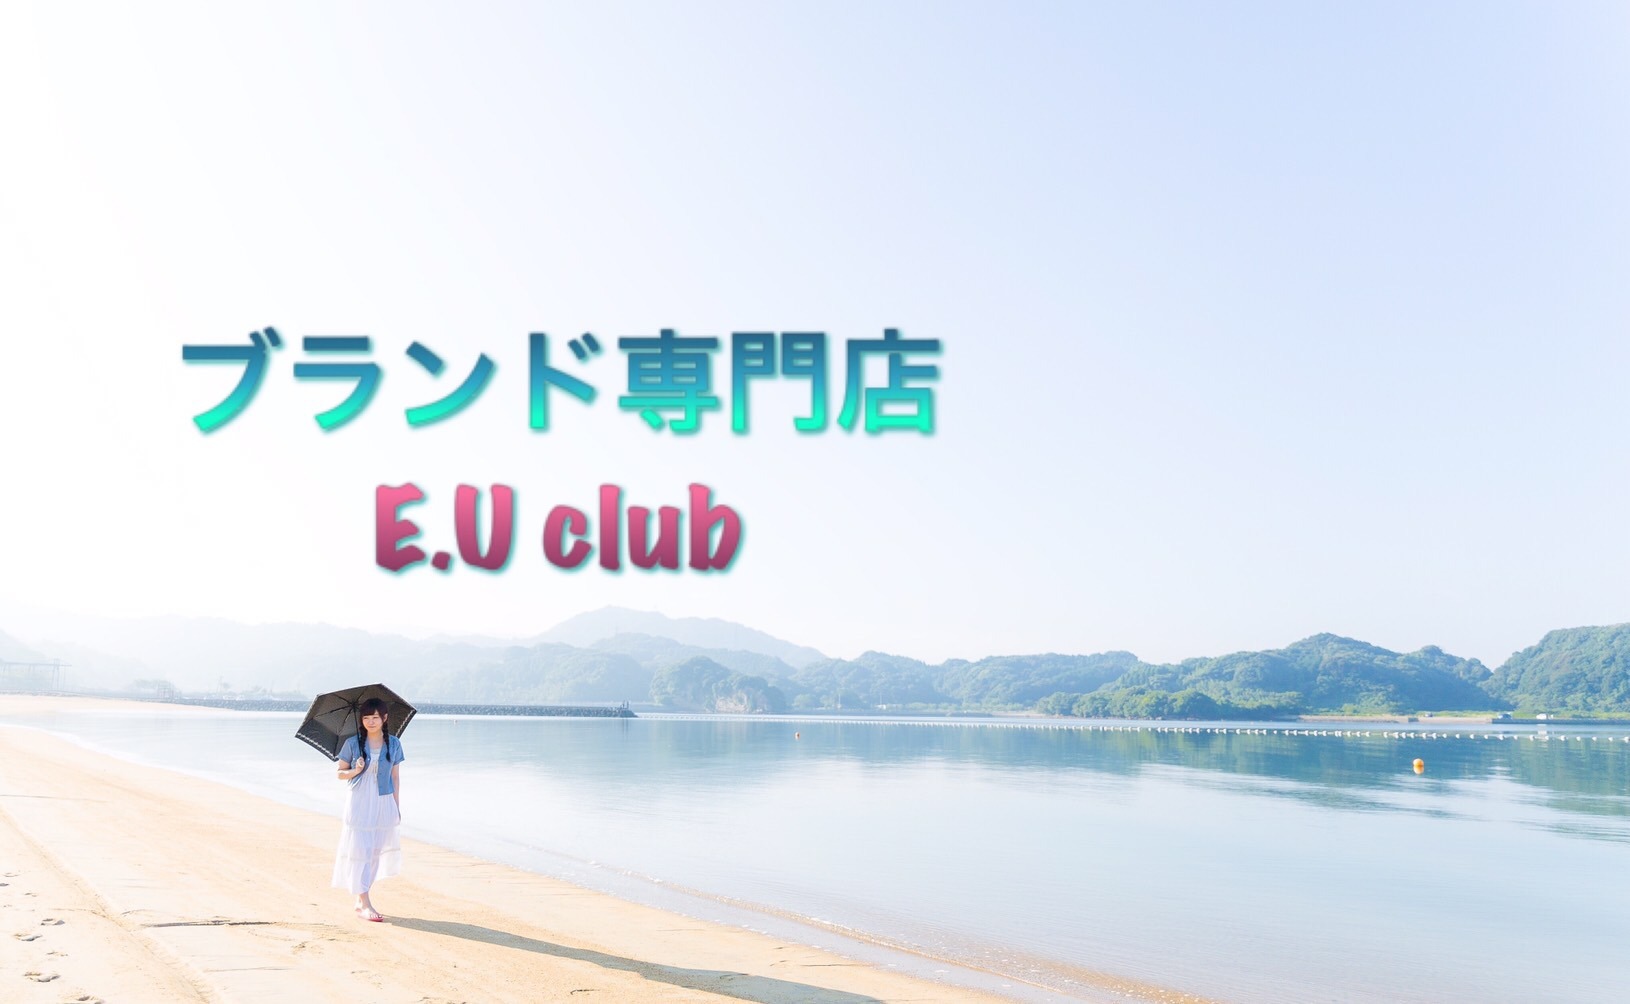 E.U club